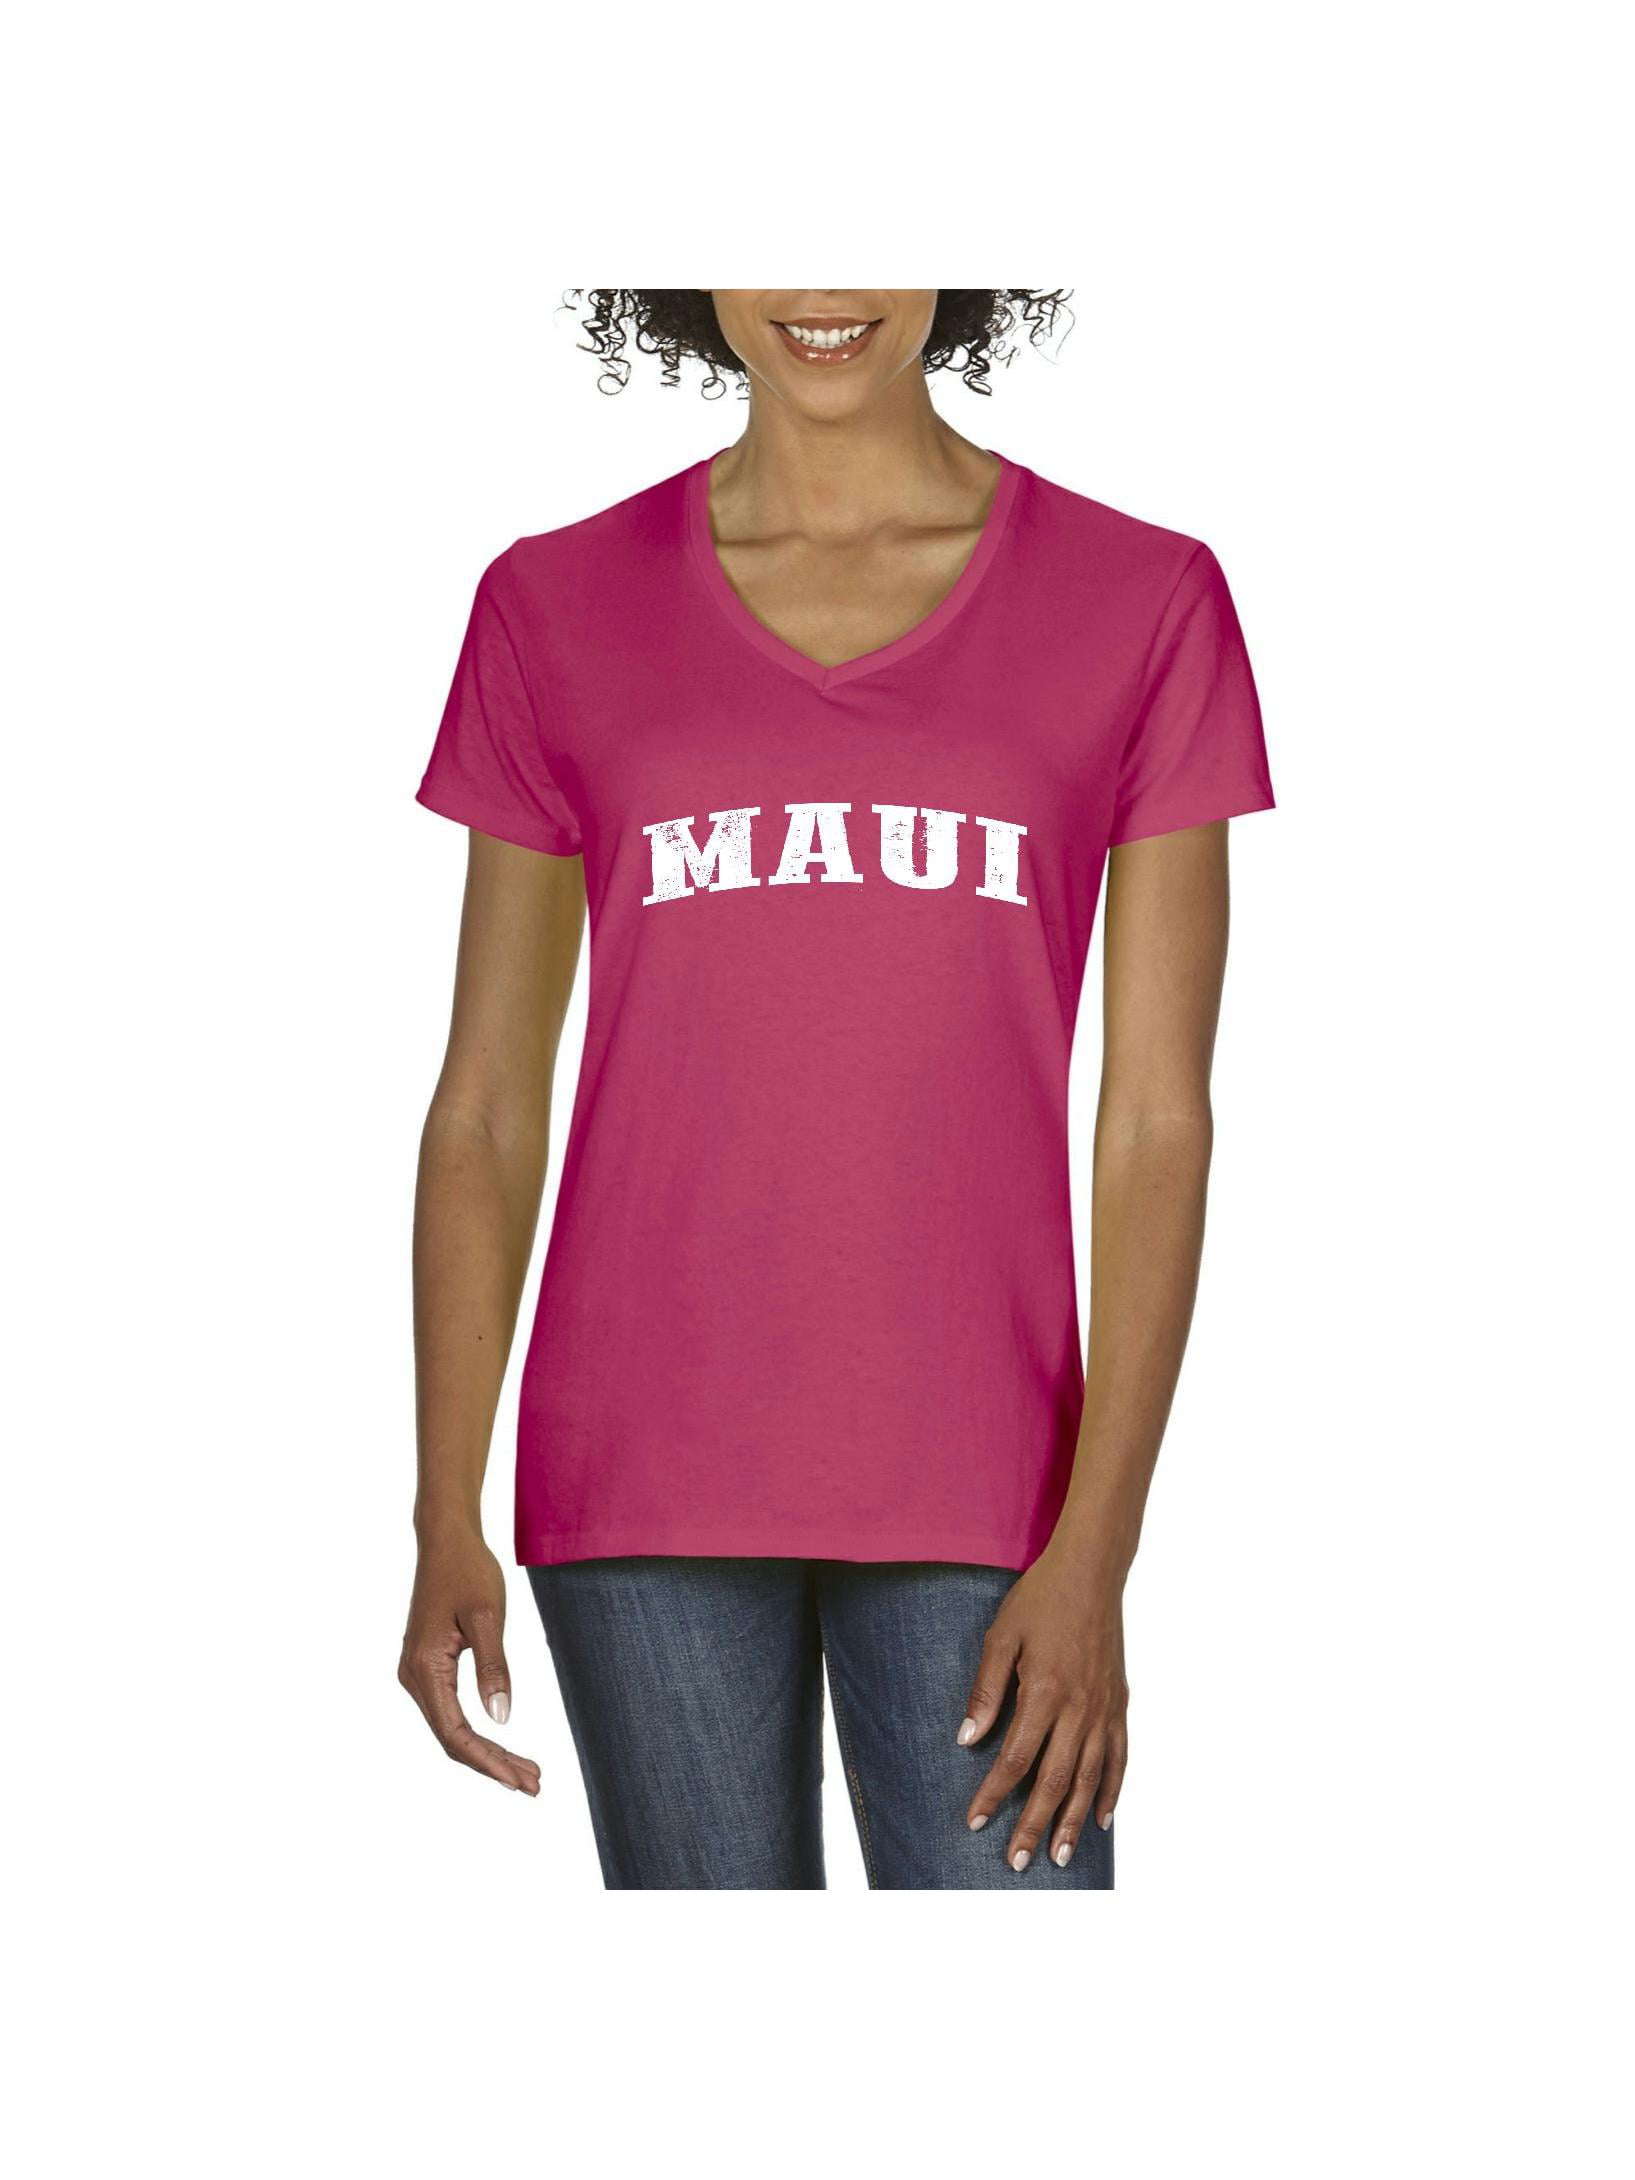 In Prink Maui Hawaii Shirt Tee Shirt Clothing 